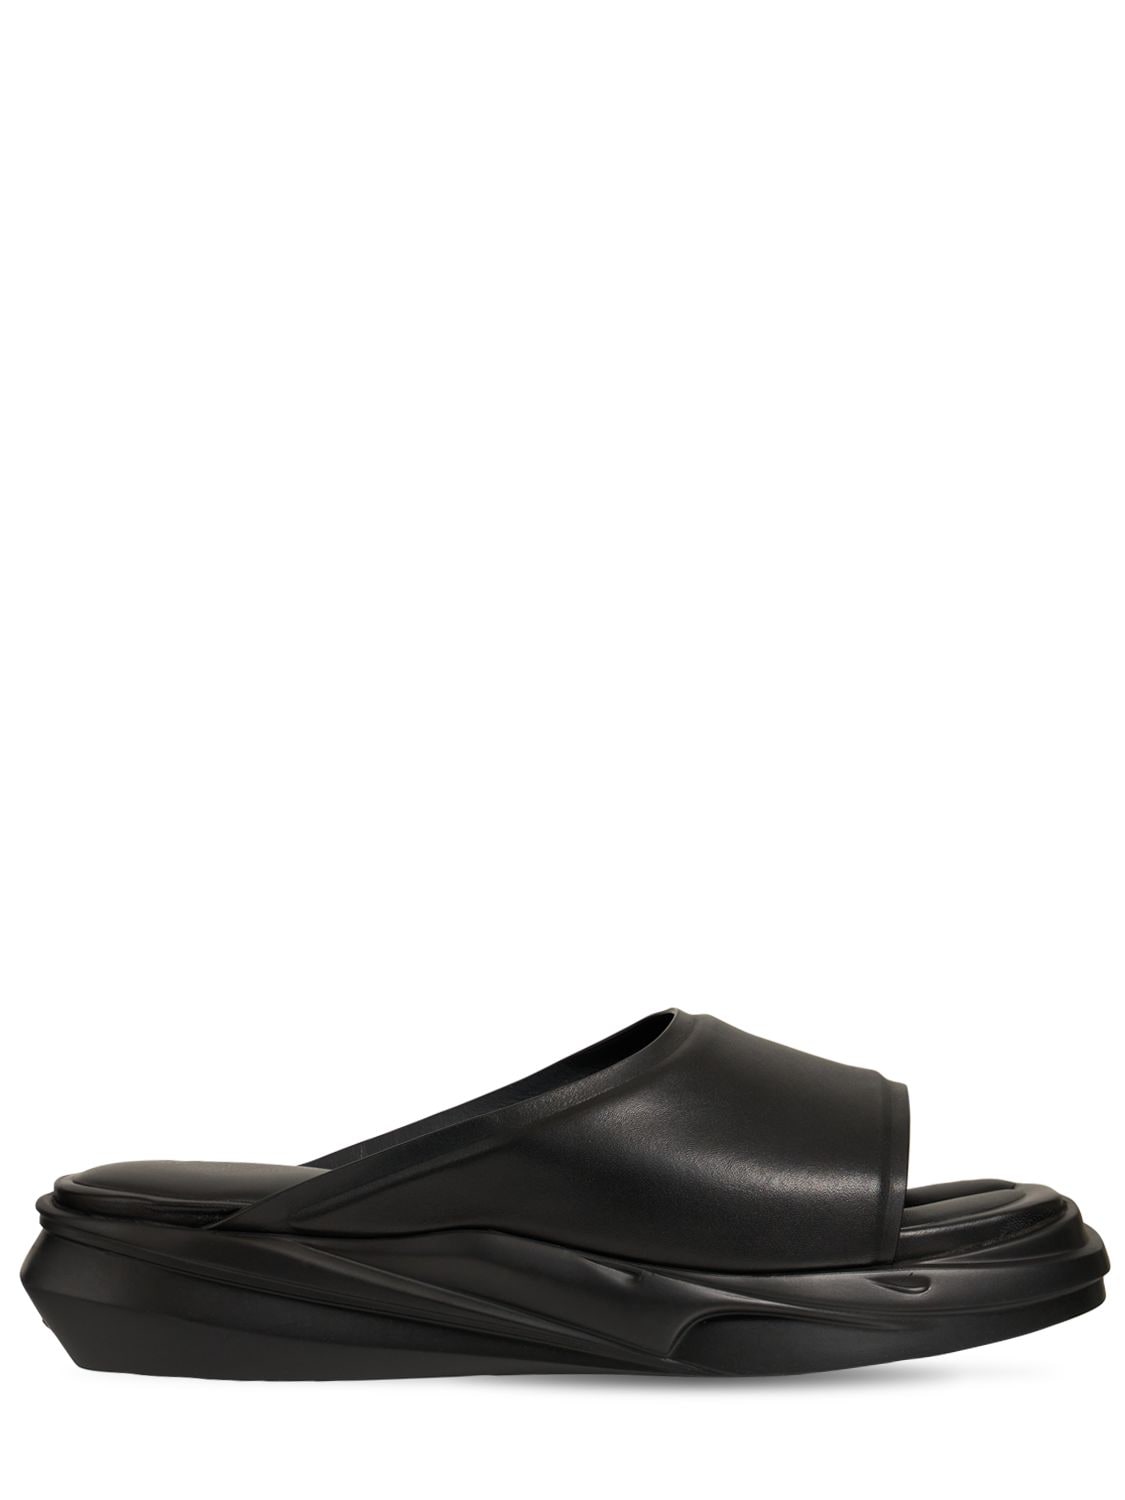 1017 ALYX 9SM Mono Leather Slide Sandals